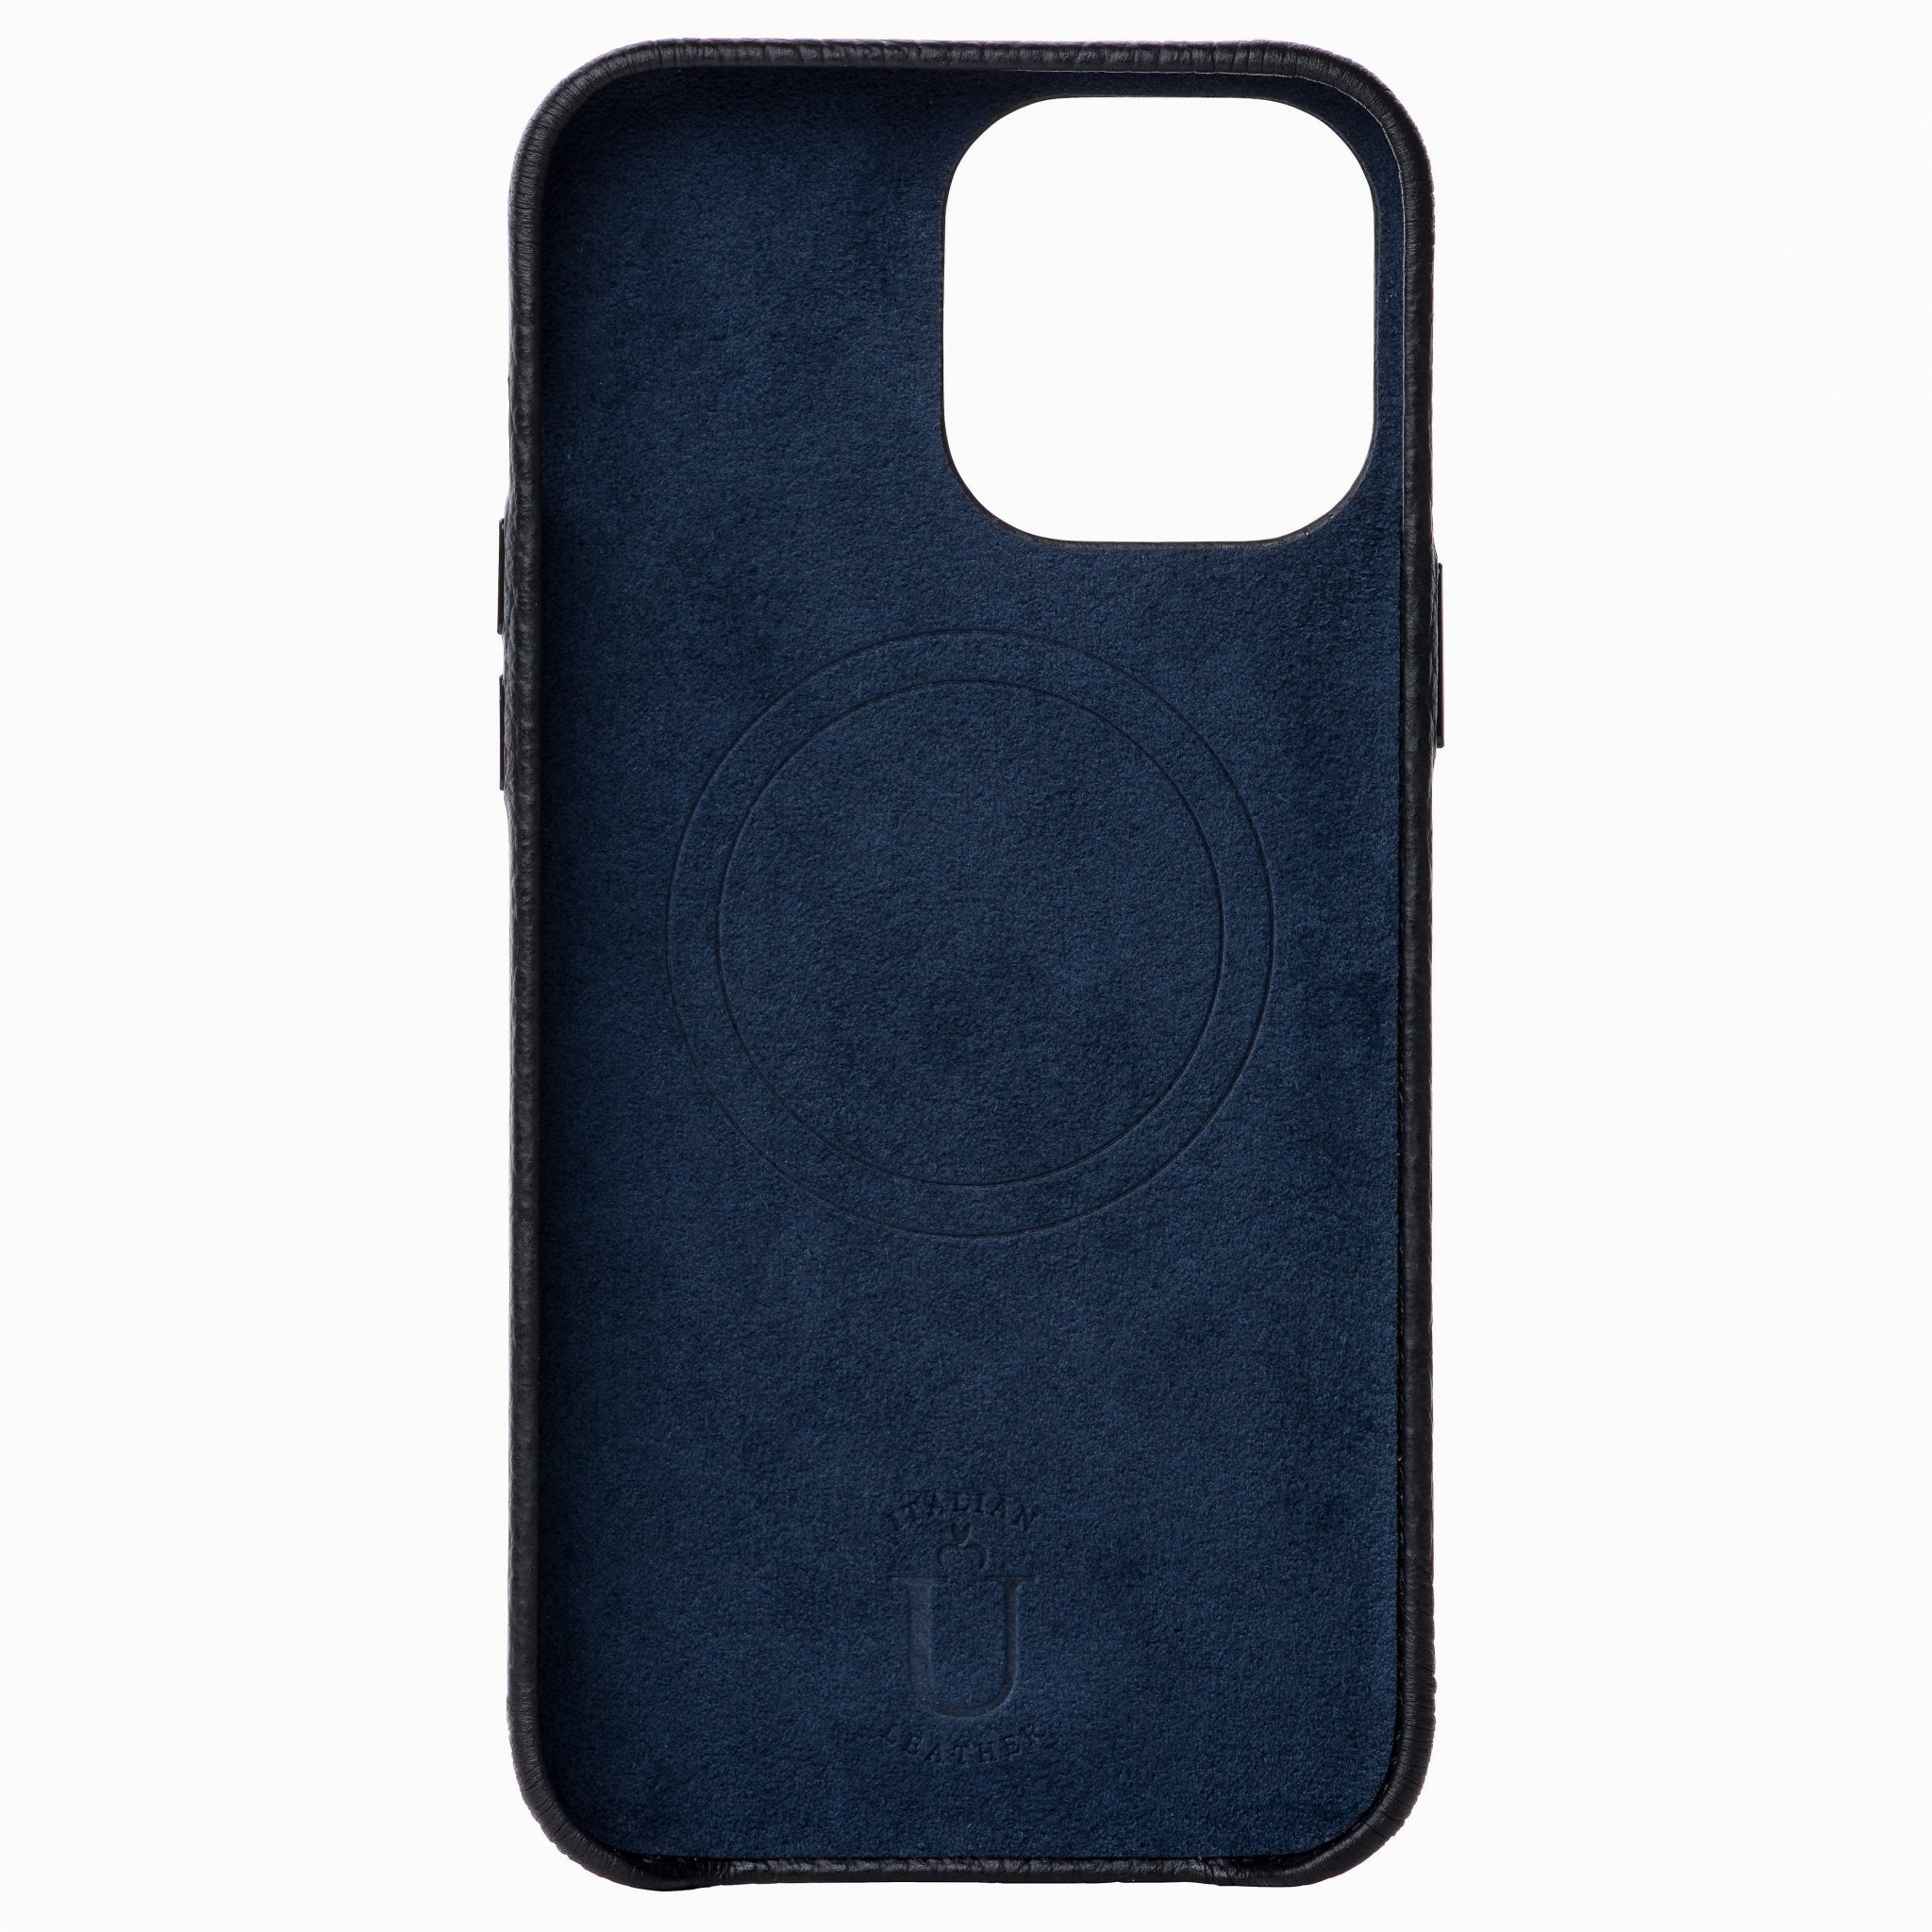 Ubique Italy Luxury iPhone Case 13 Pro Max Pebble Grain Leather Black Inner Lining